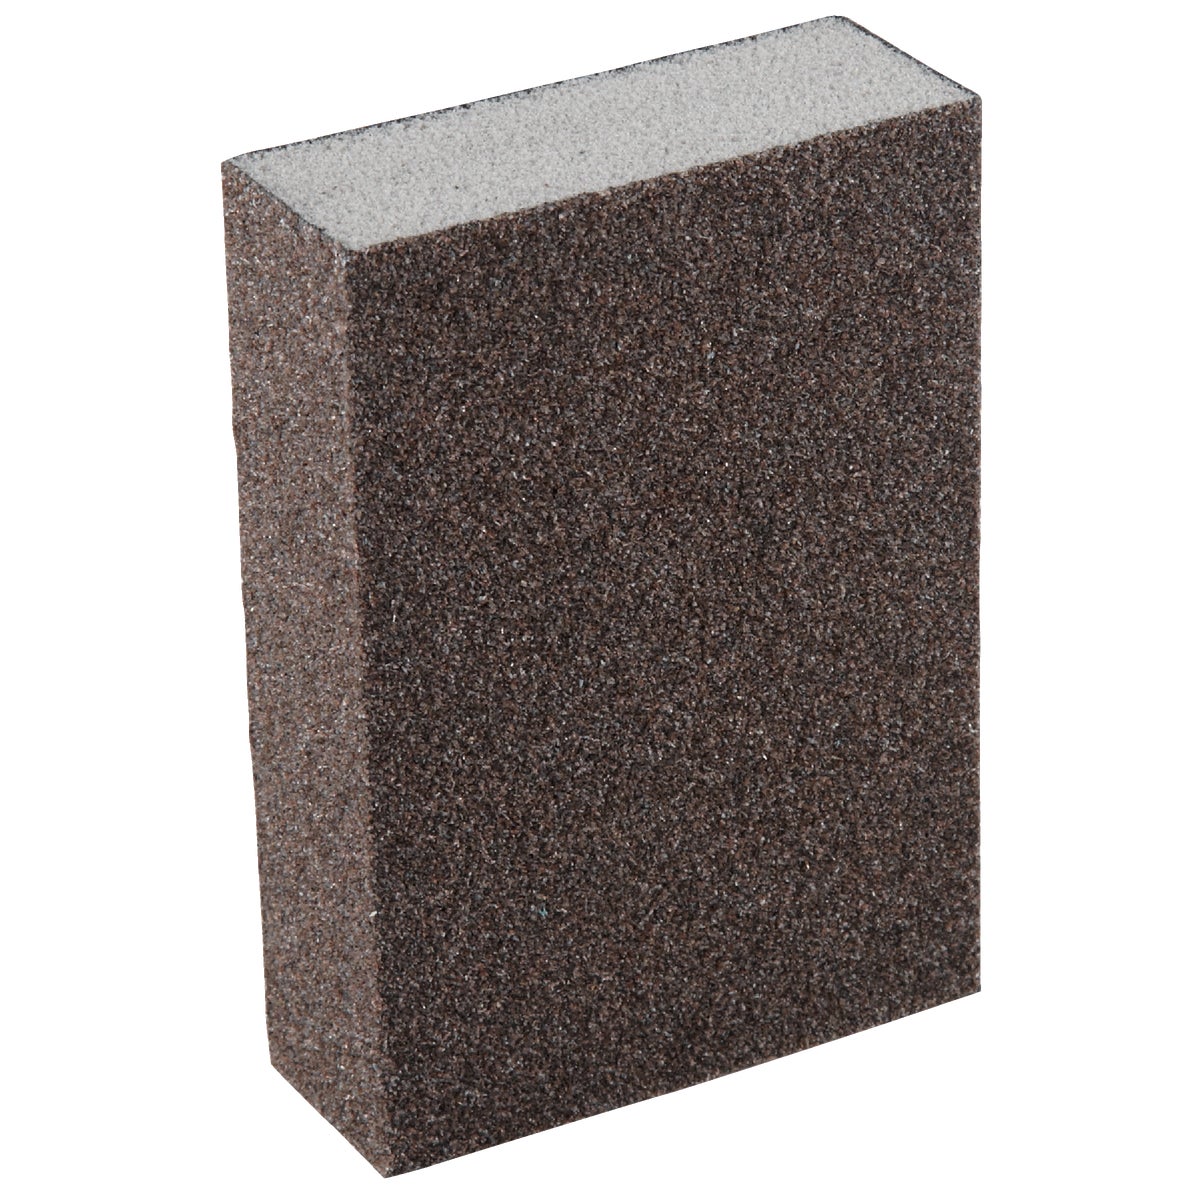 Item 322725, 3M Sanding Sponges are designed for sanding wood, paint, metal, plastic or 